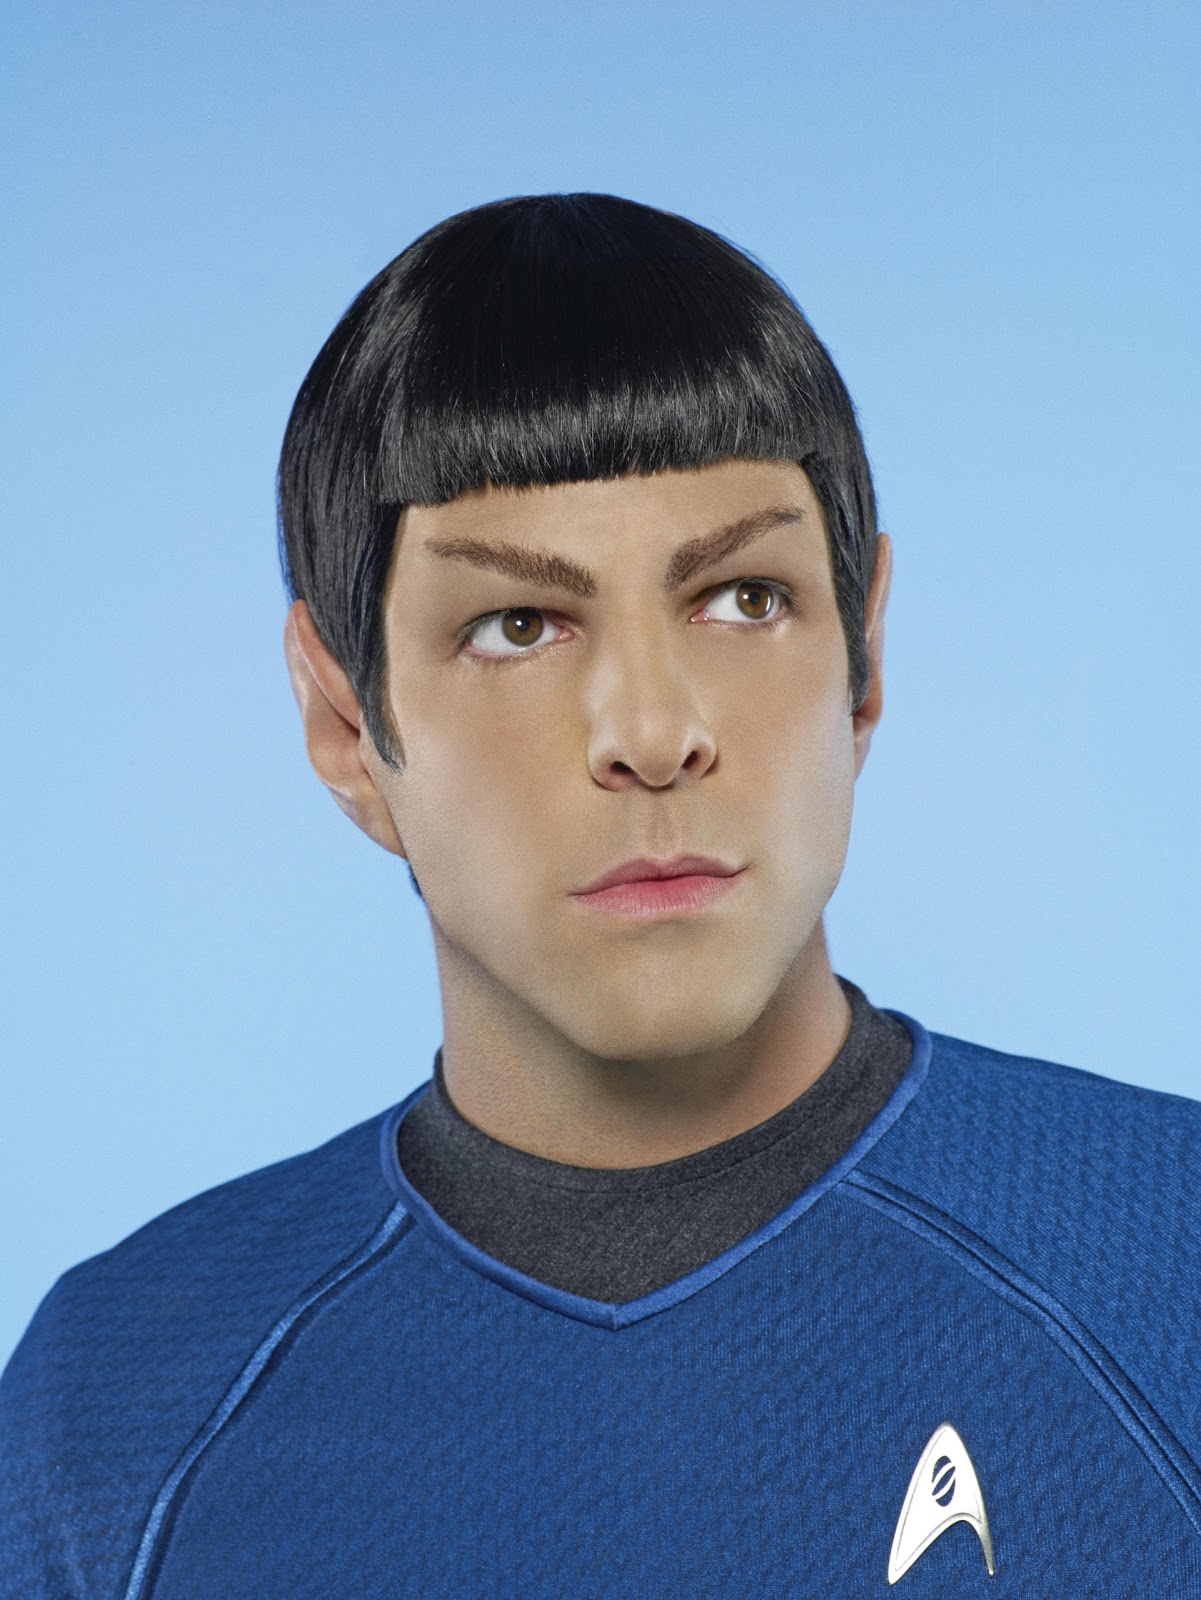 Zachary Quinto Spock